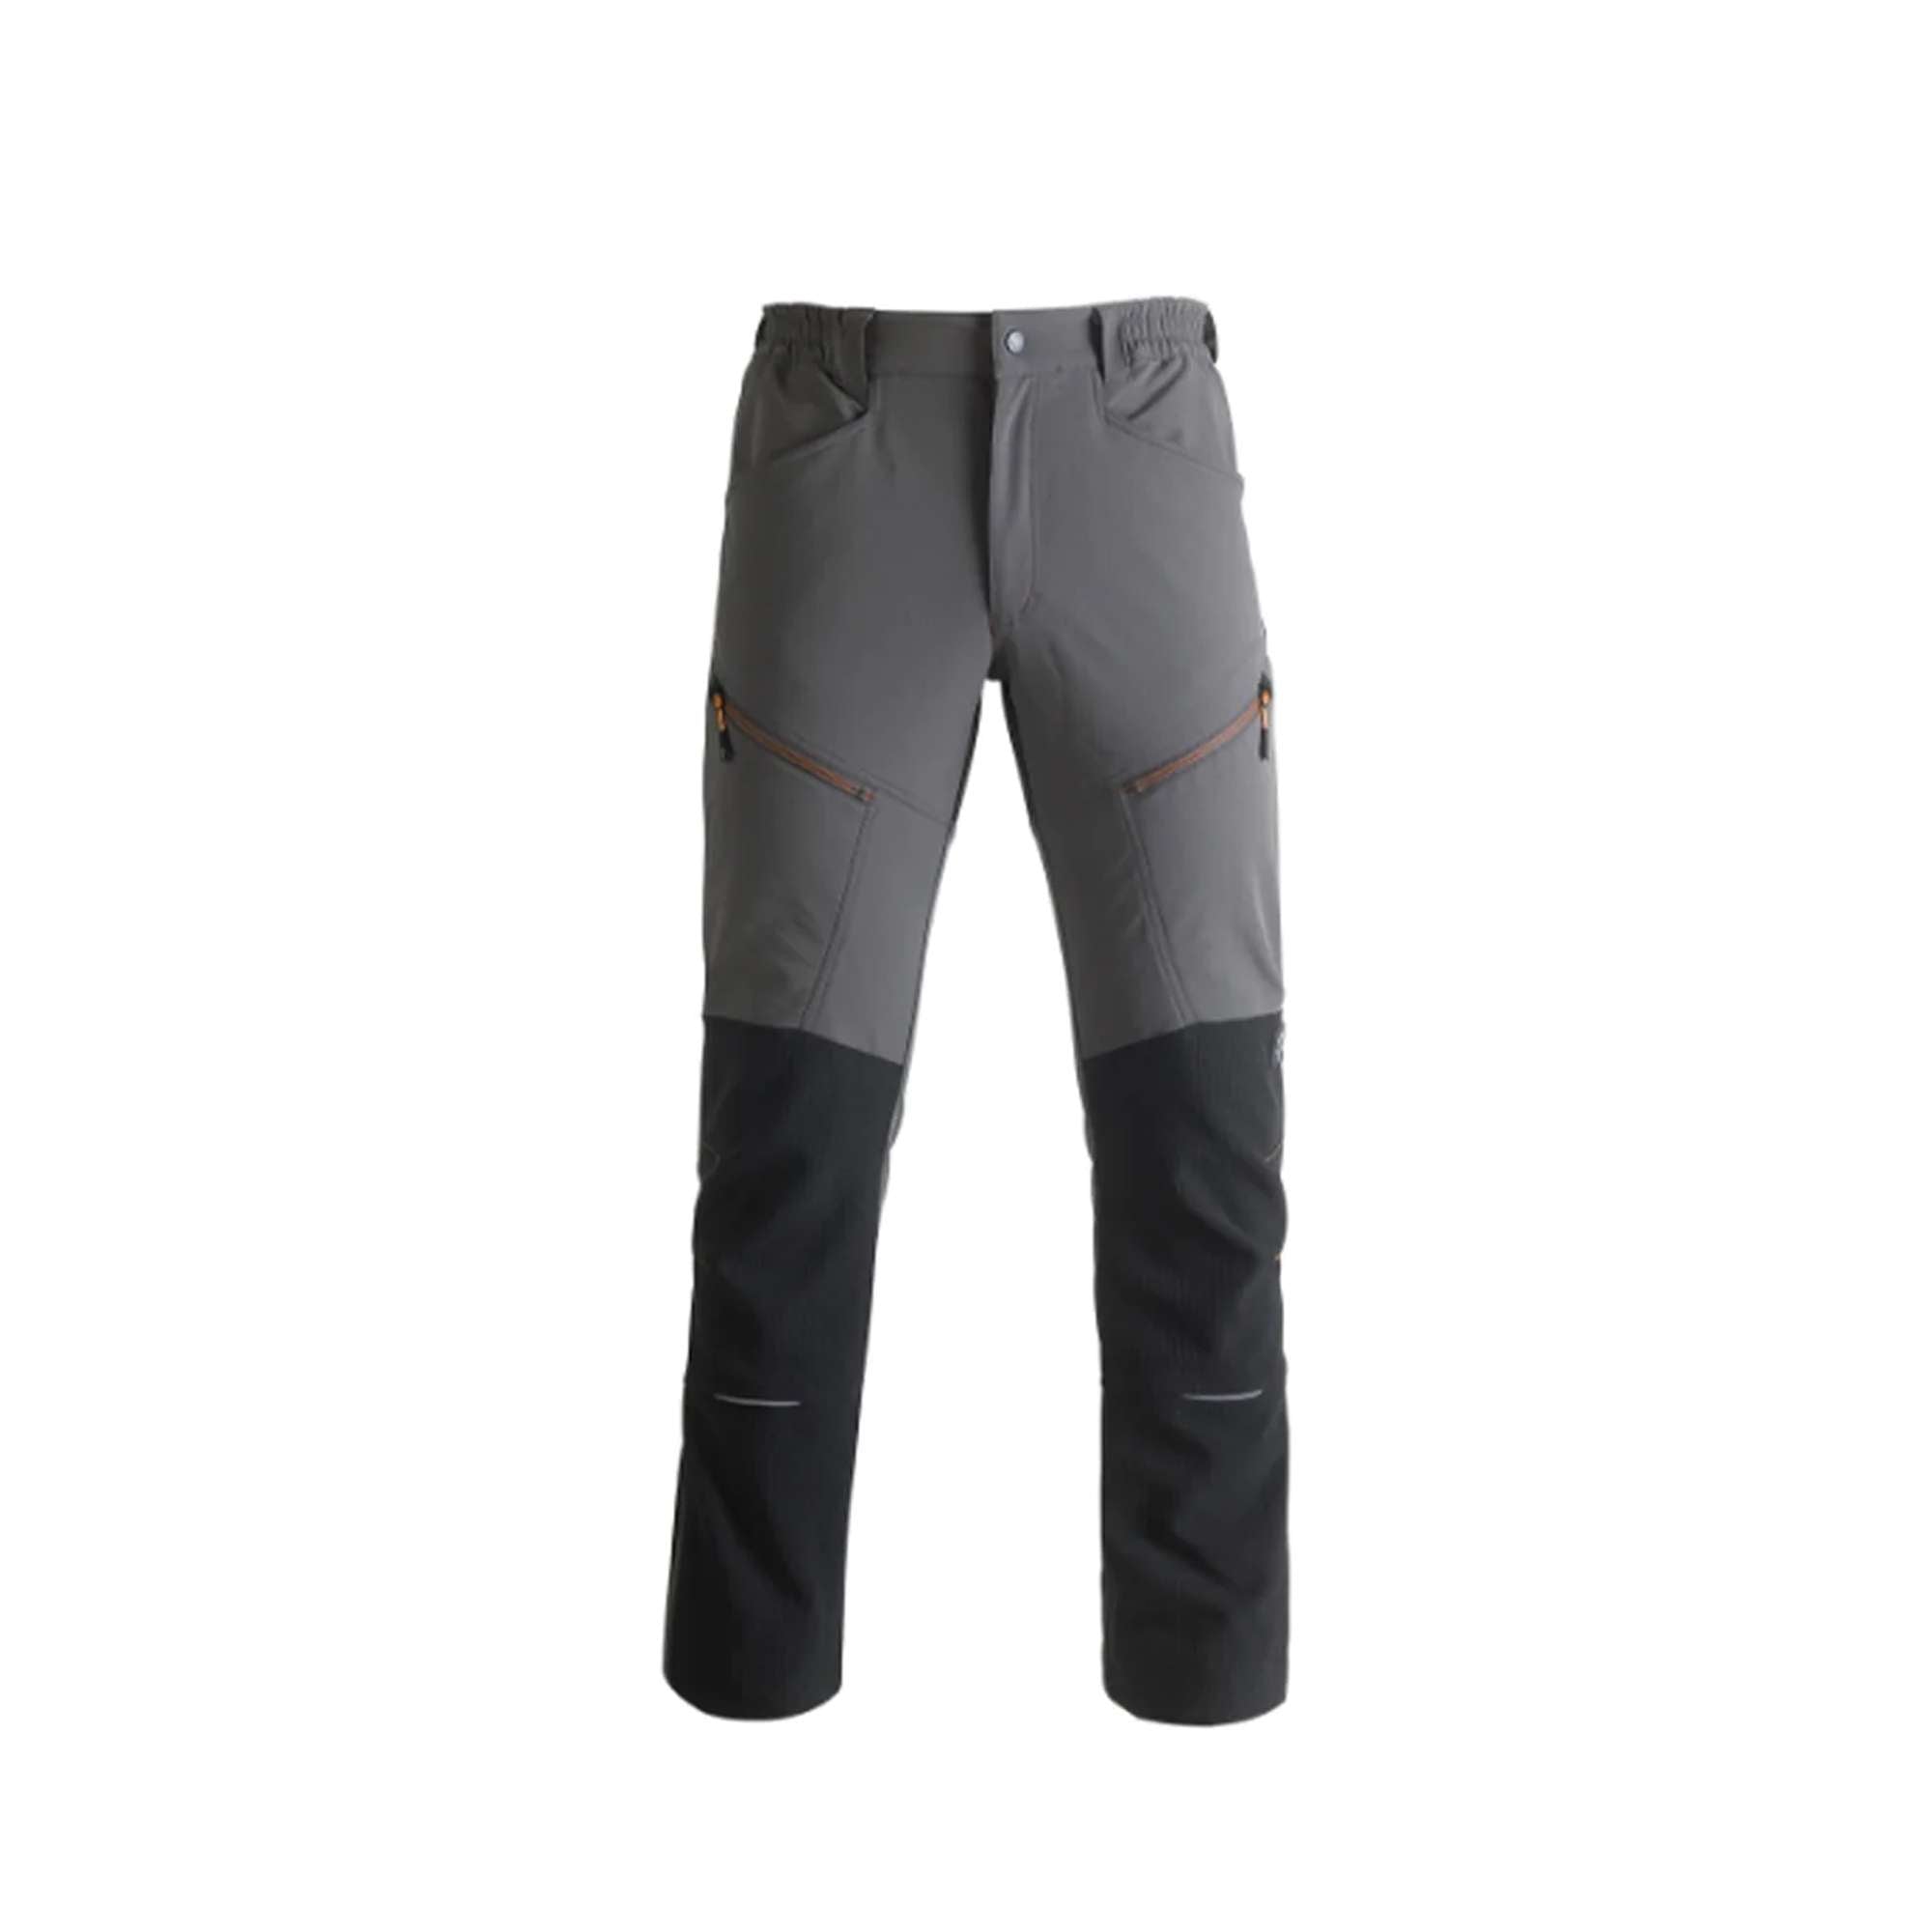 Grey/Black stretch work pants 54% Nylon 39% Polyester 7% Size S Kapriol